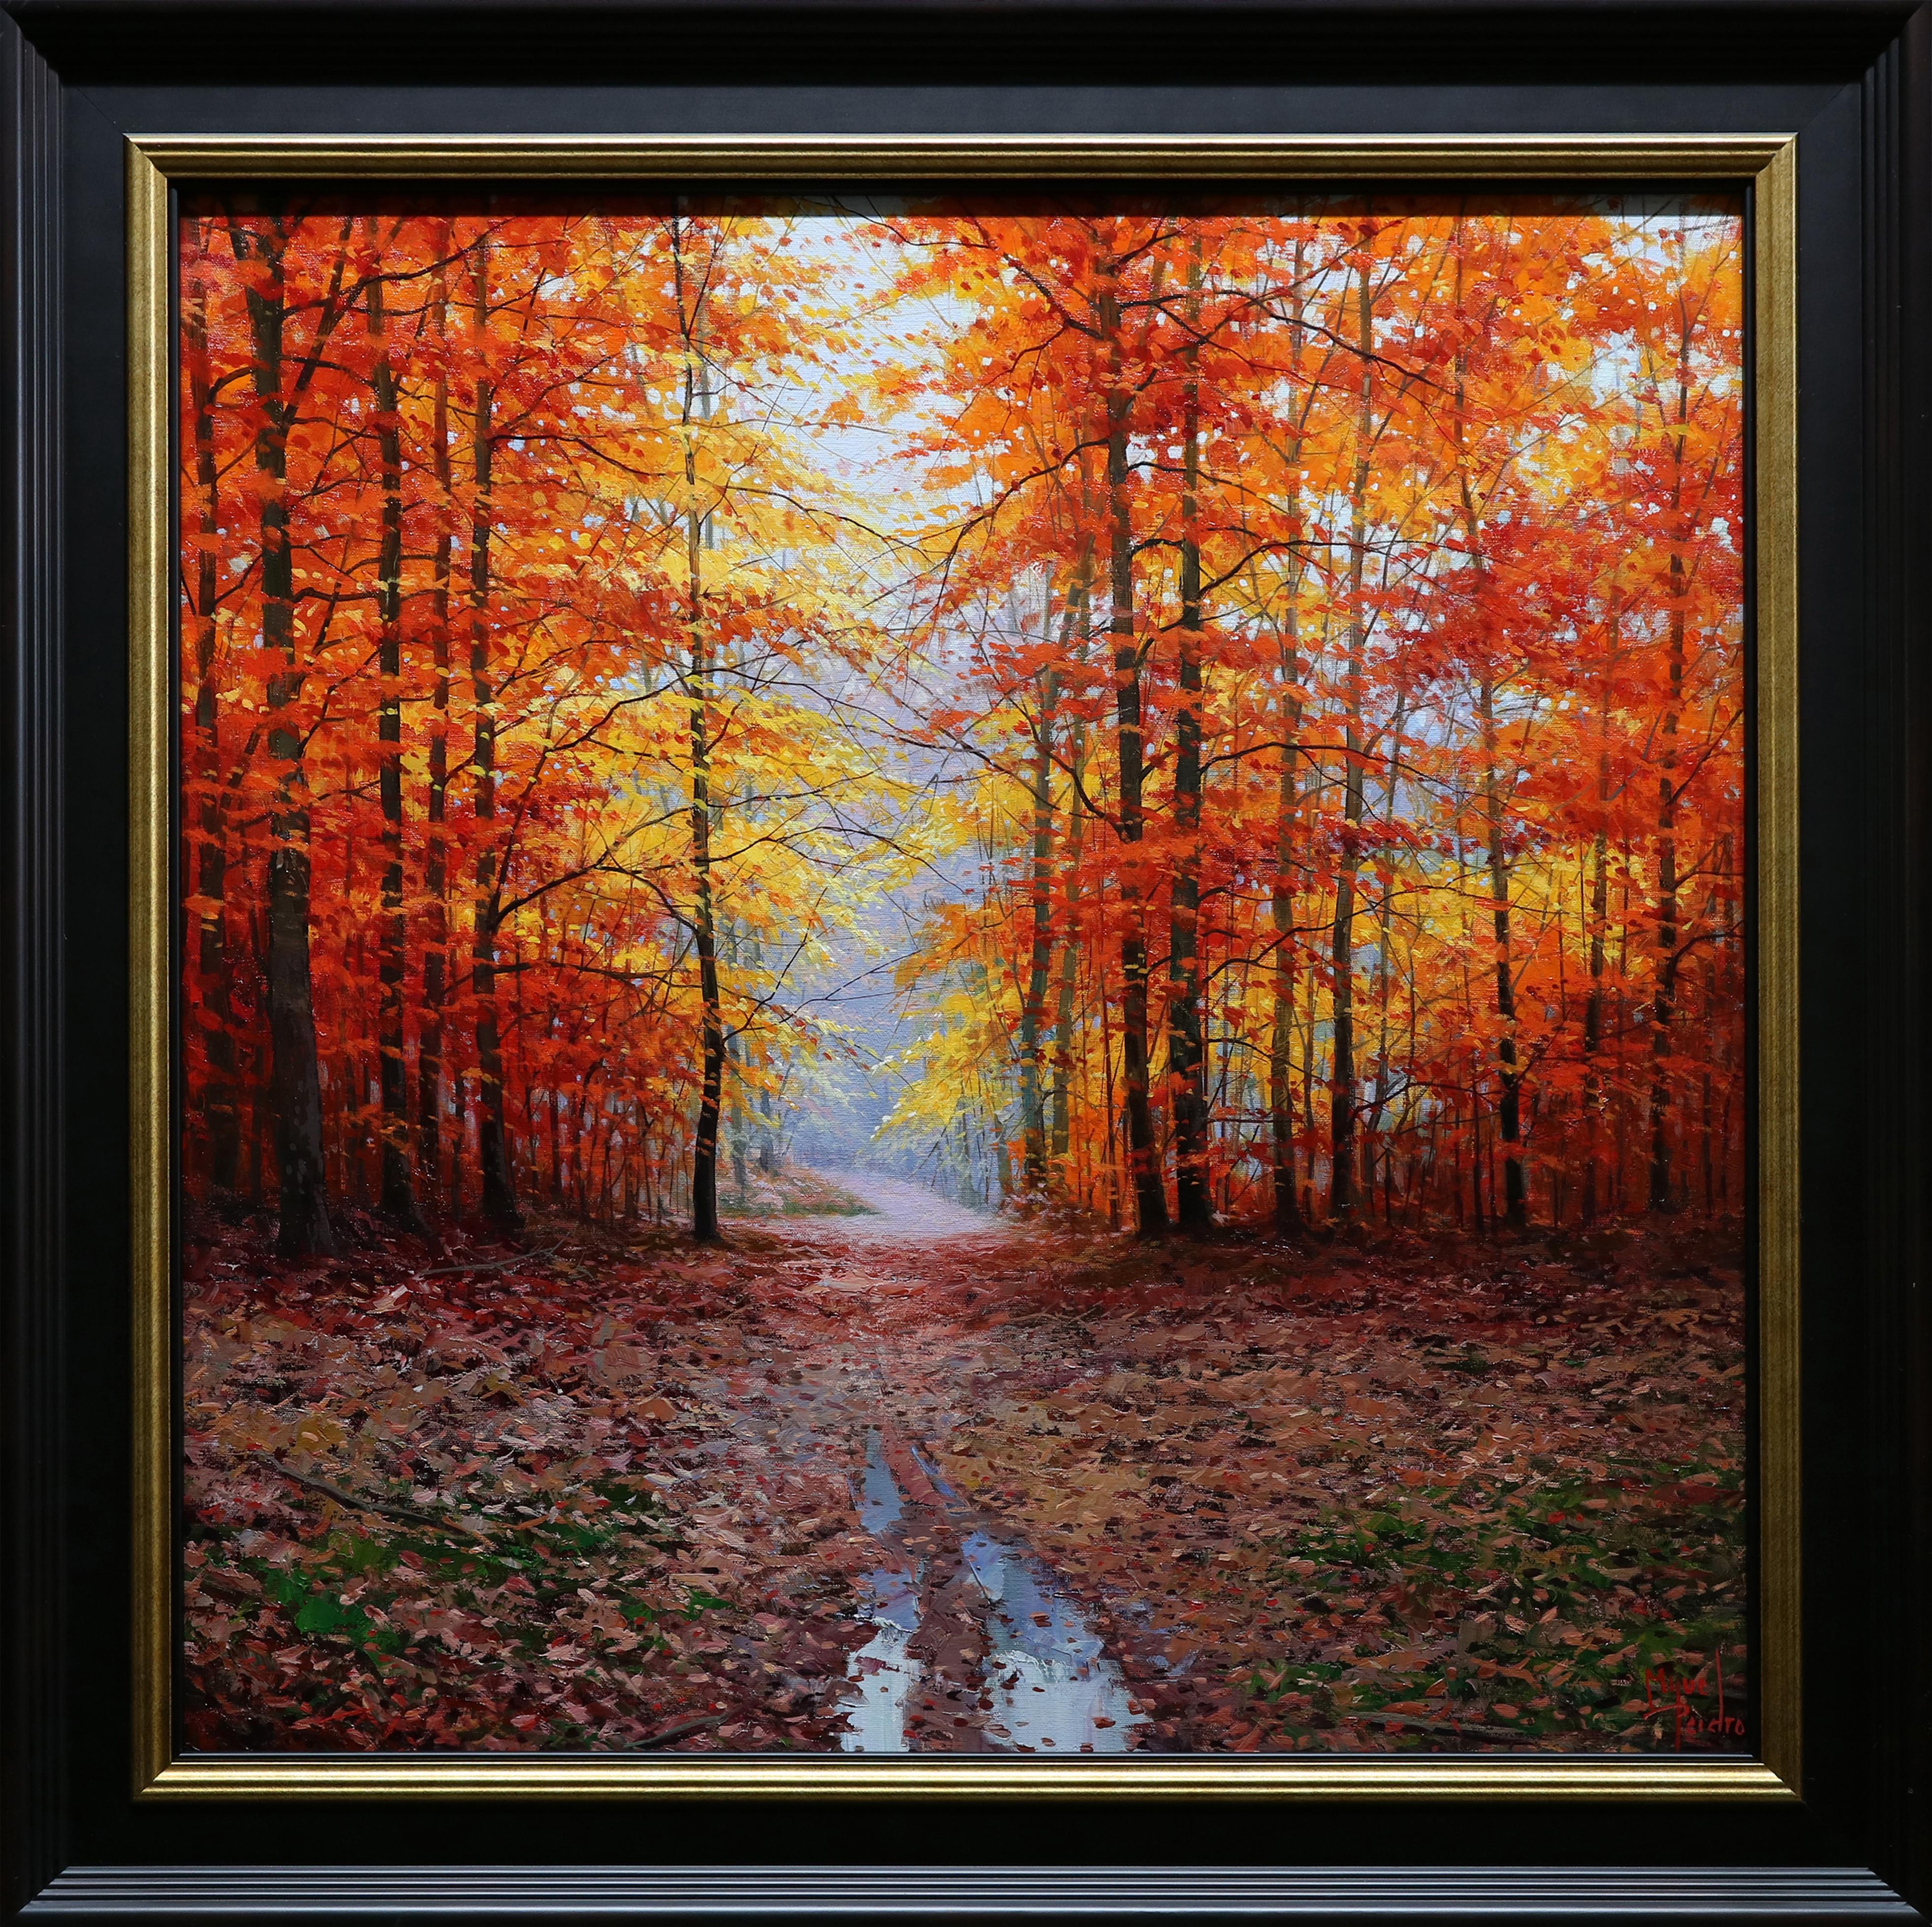 Miguel Peidro Landscape Painting - Frondosidad Otonal (Autumn Lushness)